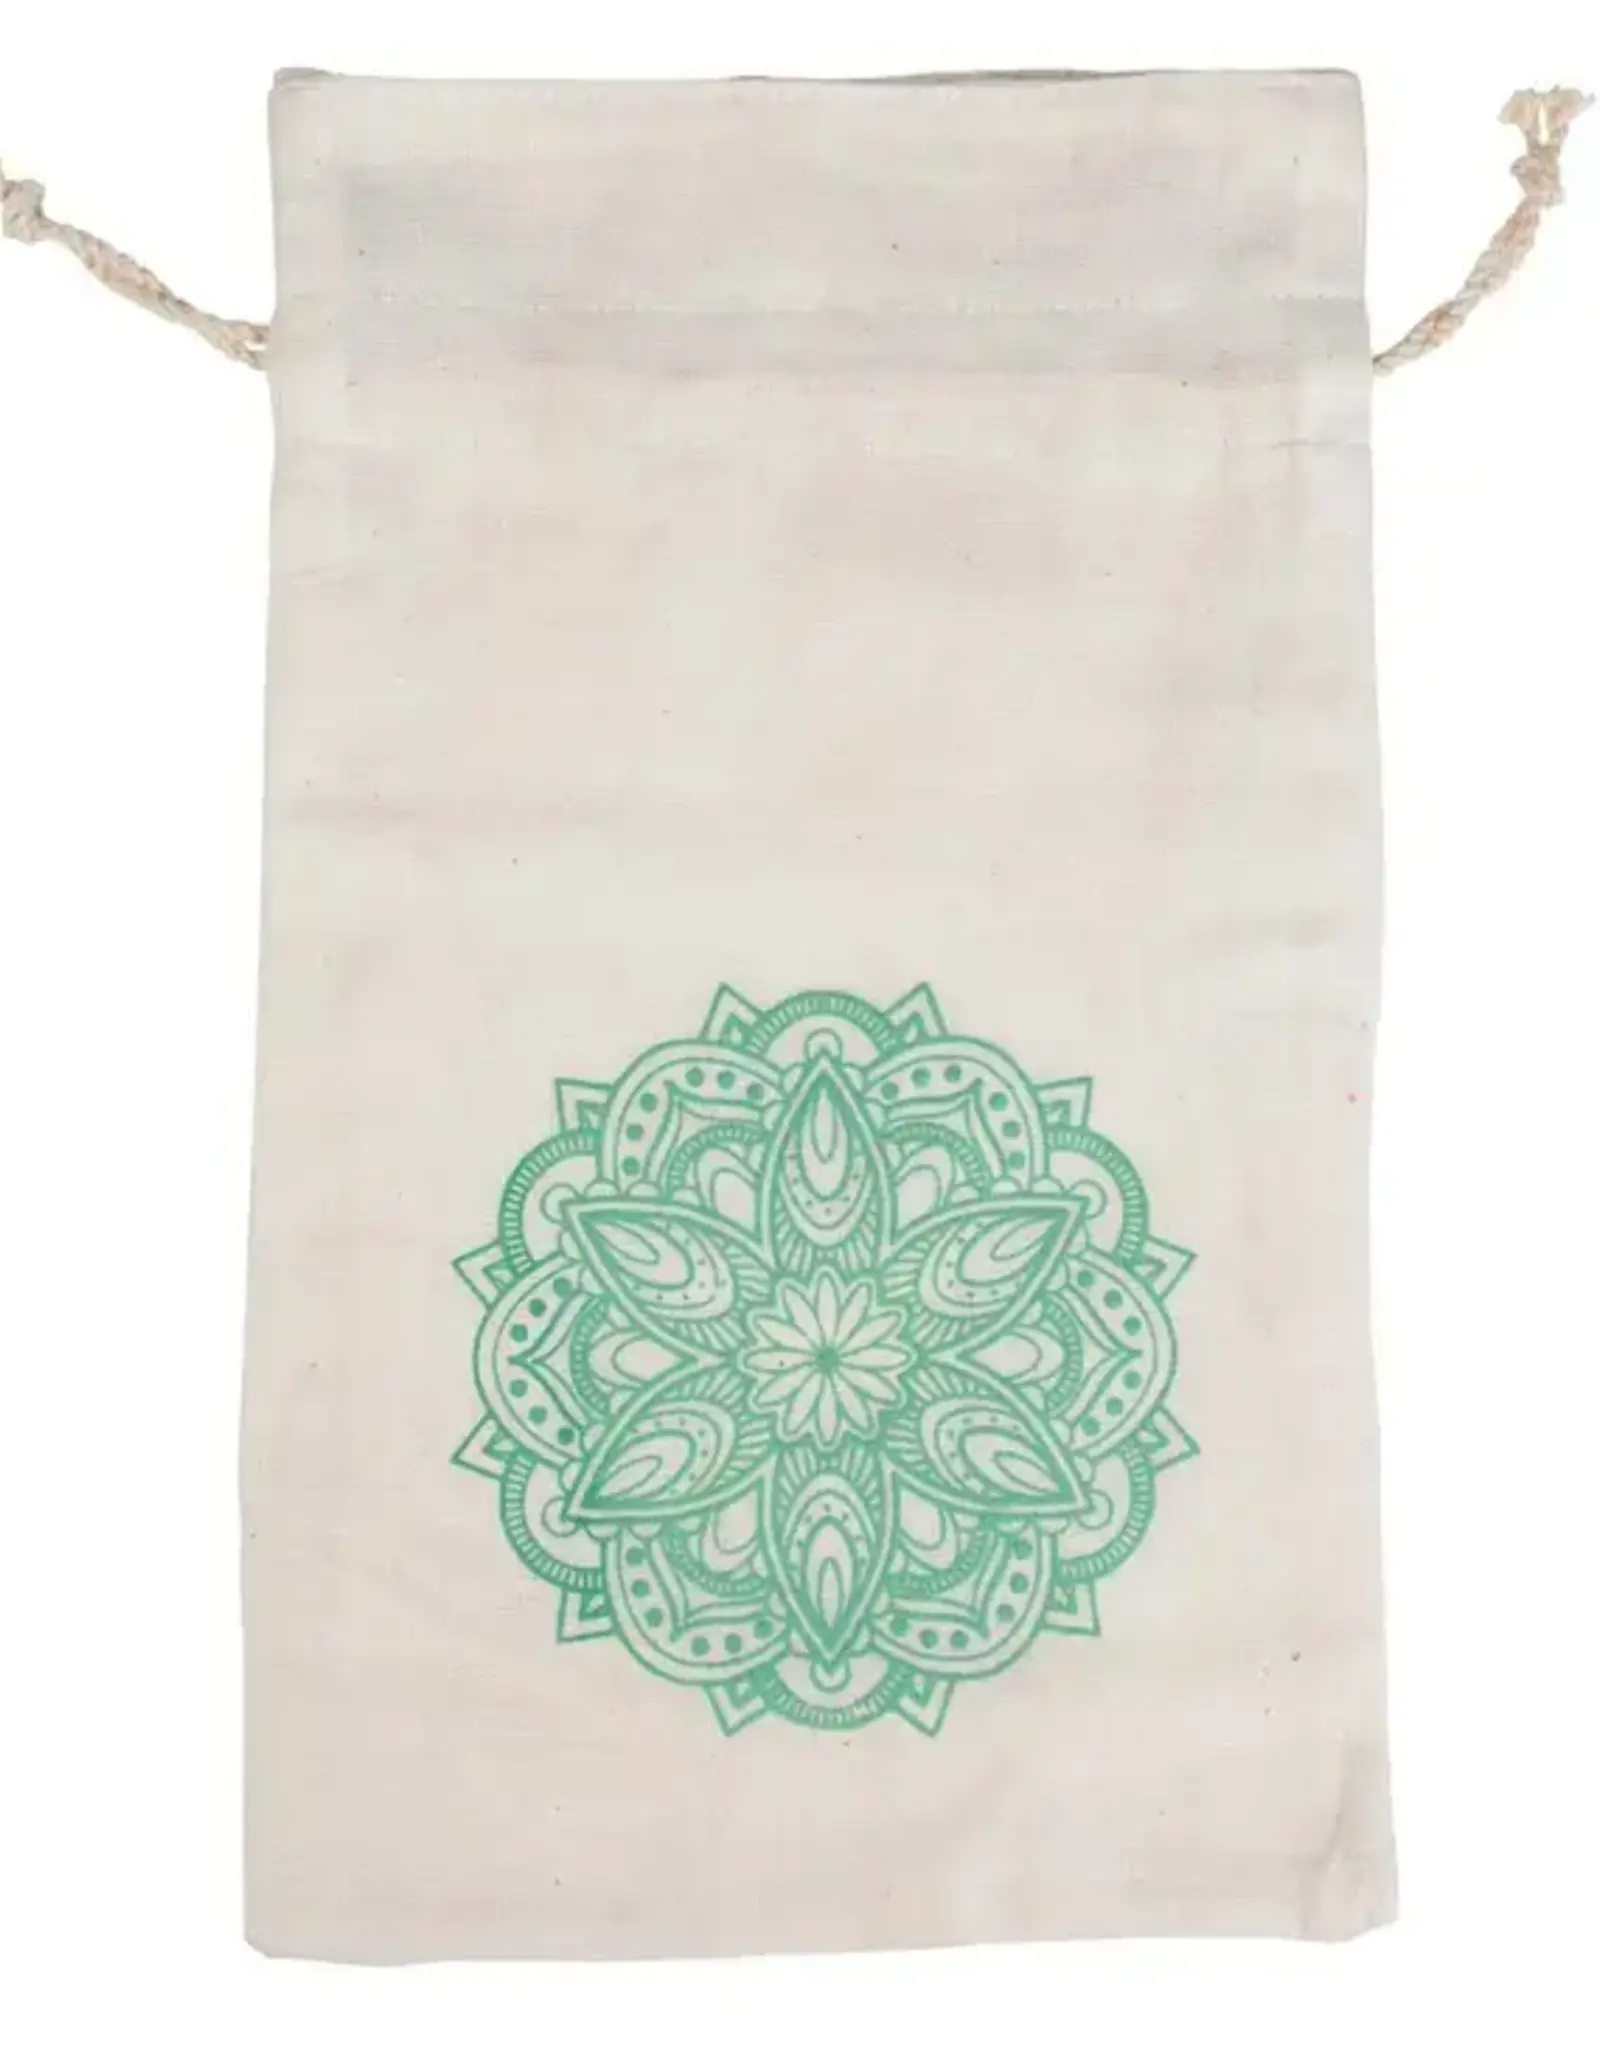 Ten Thousand Villages Green Mandala Cloth Gift Bag